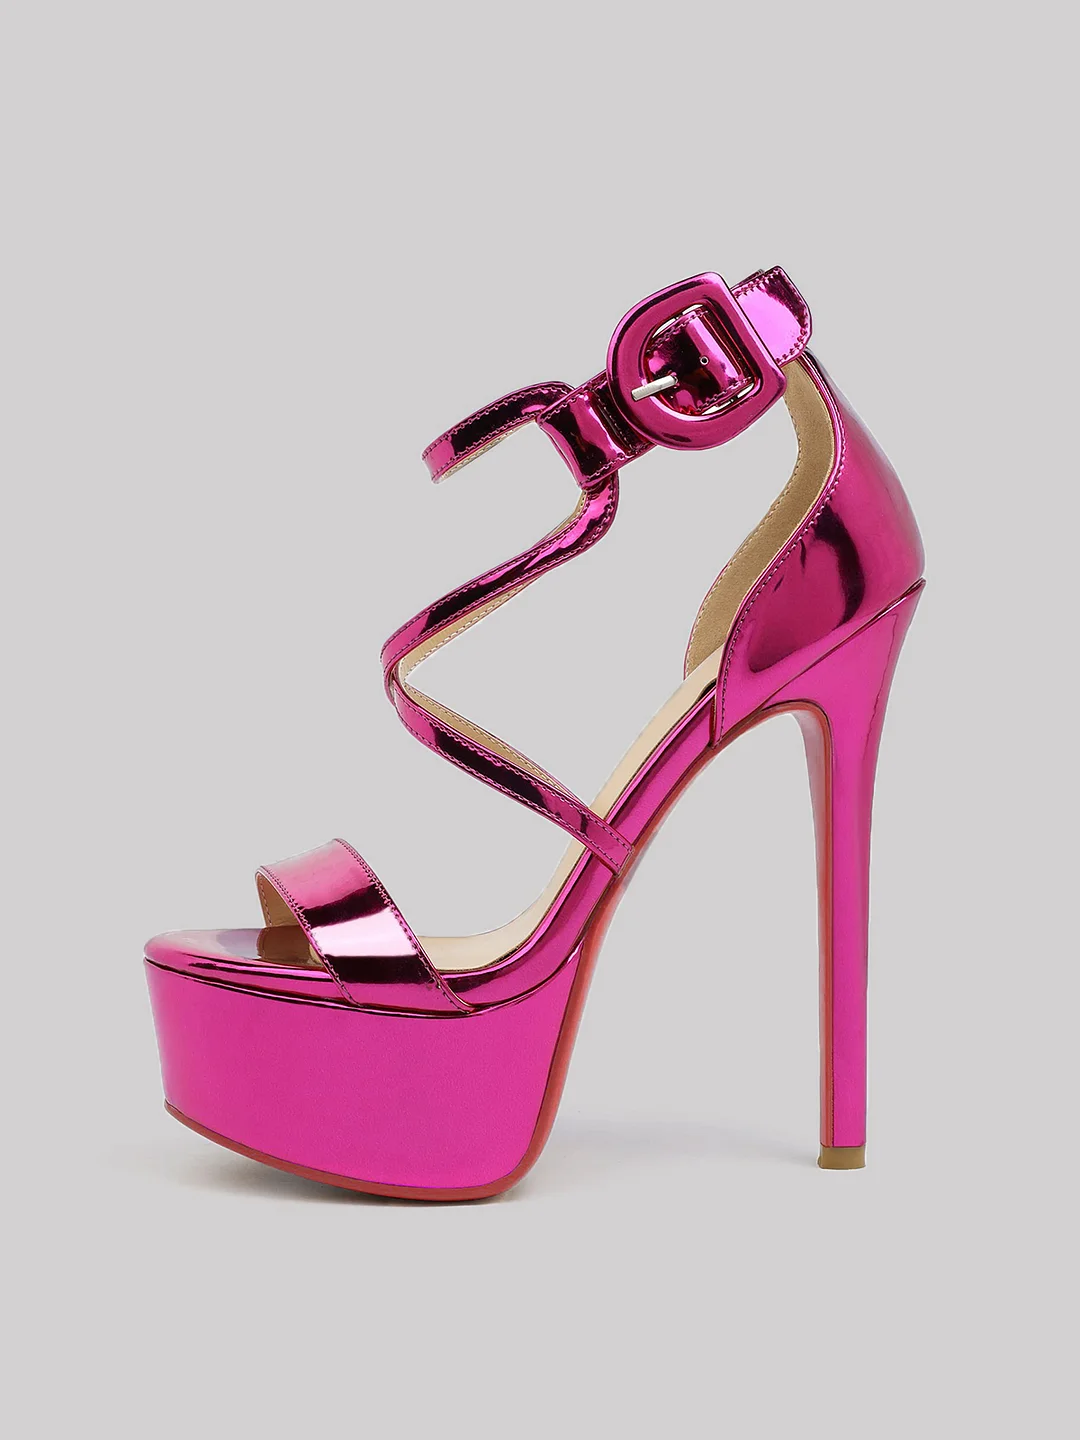 150mm Open Toe Platform Sandals Ankle Strap High Heel Red Bottom Summer Shoes for Women